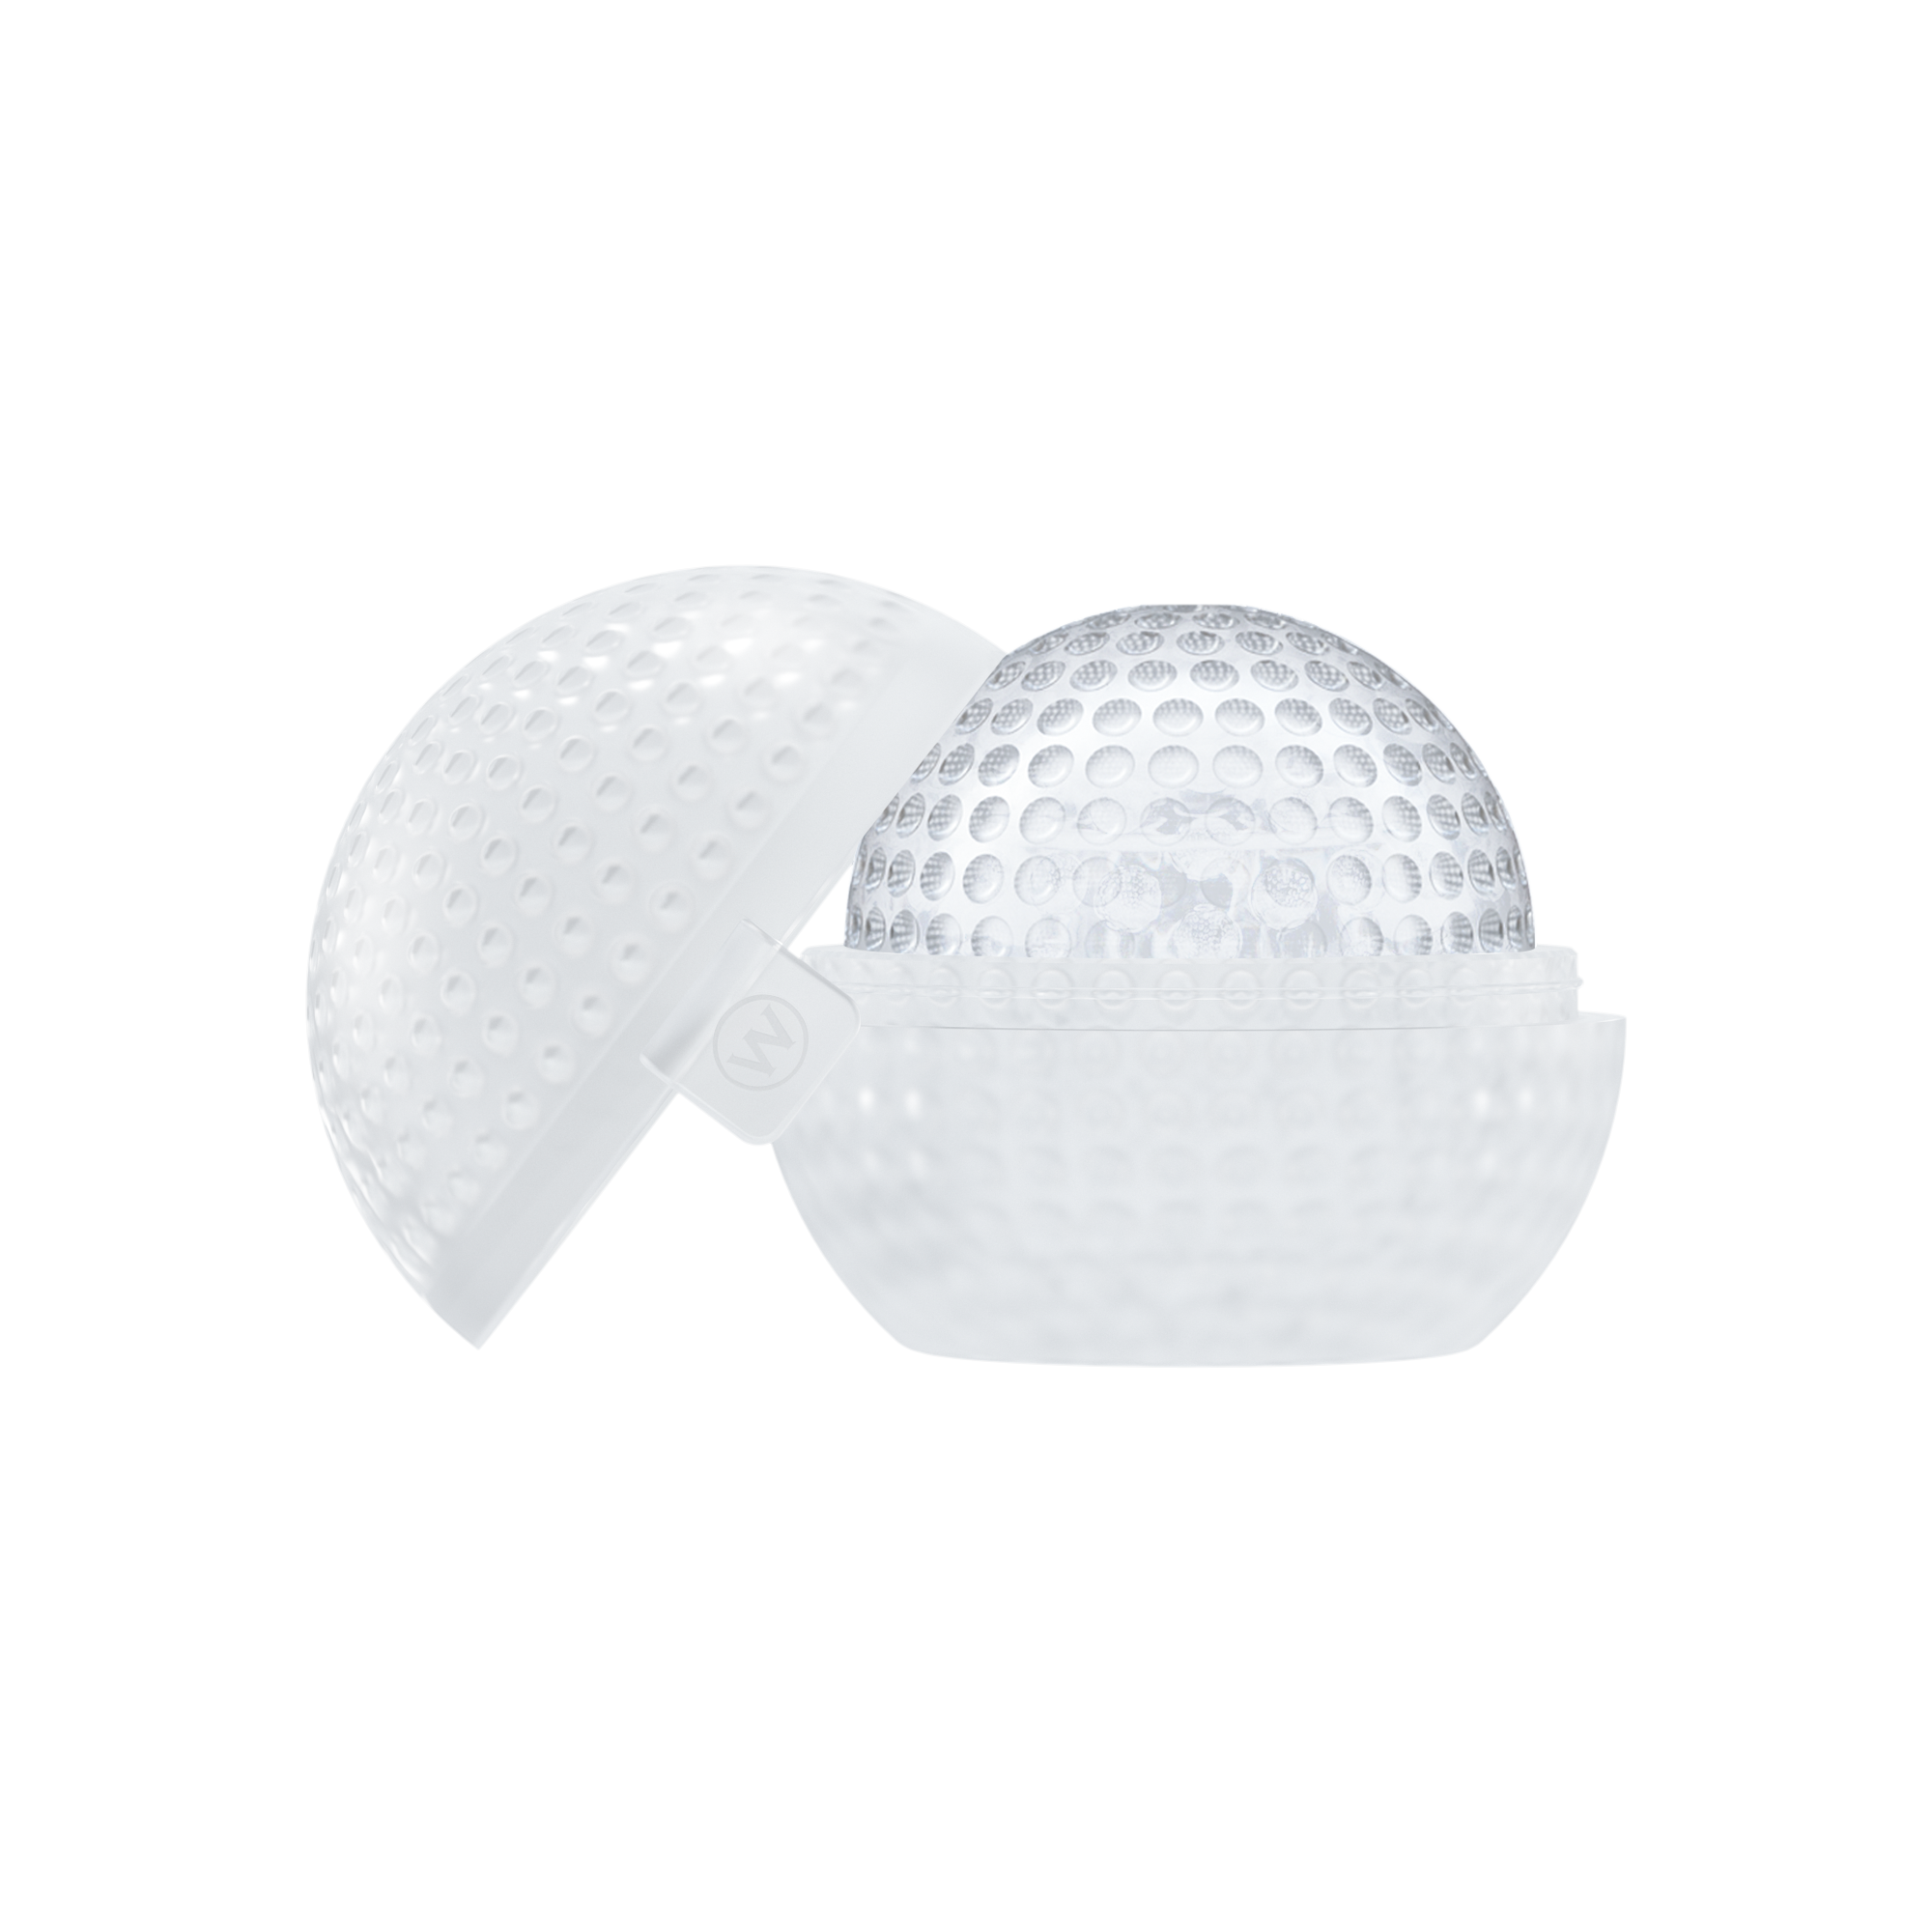 Golf Ball Ice Mold – The Whiskey Ball